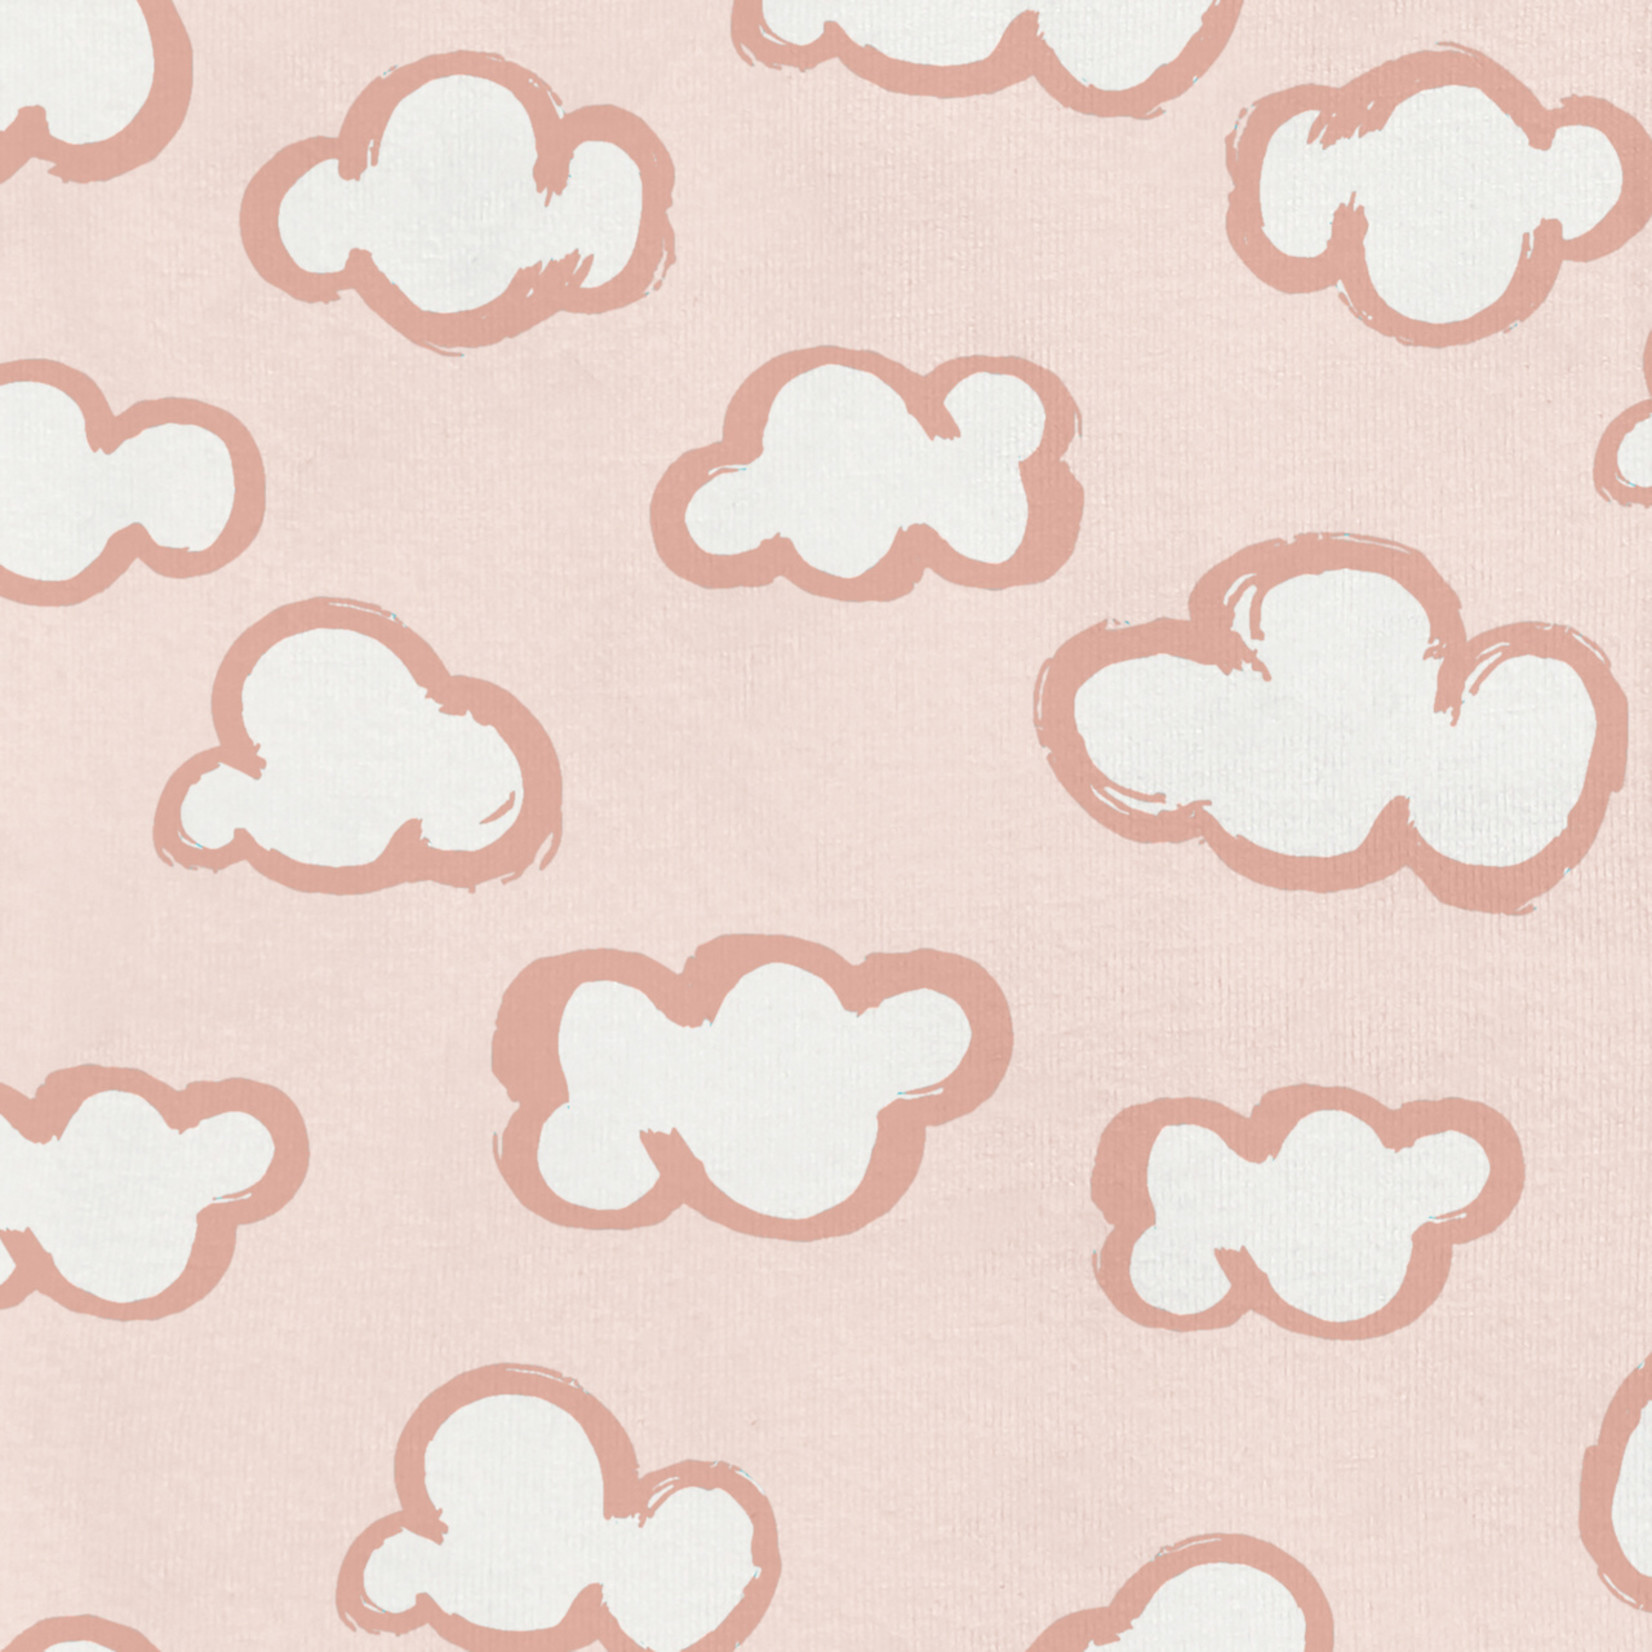 Love To Dream Organic Sleep Bag Lite 0.2 TOG-Dusty Pink Clouds